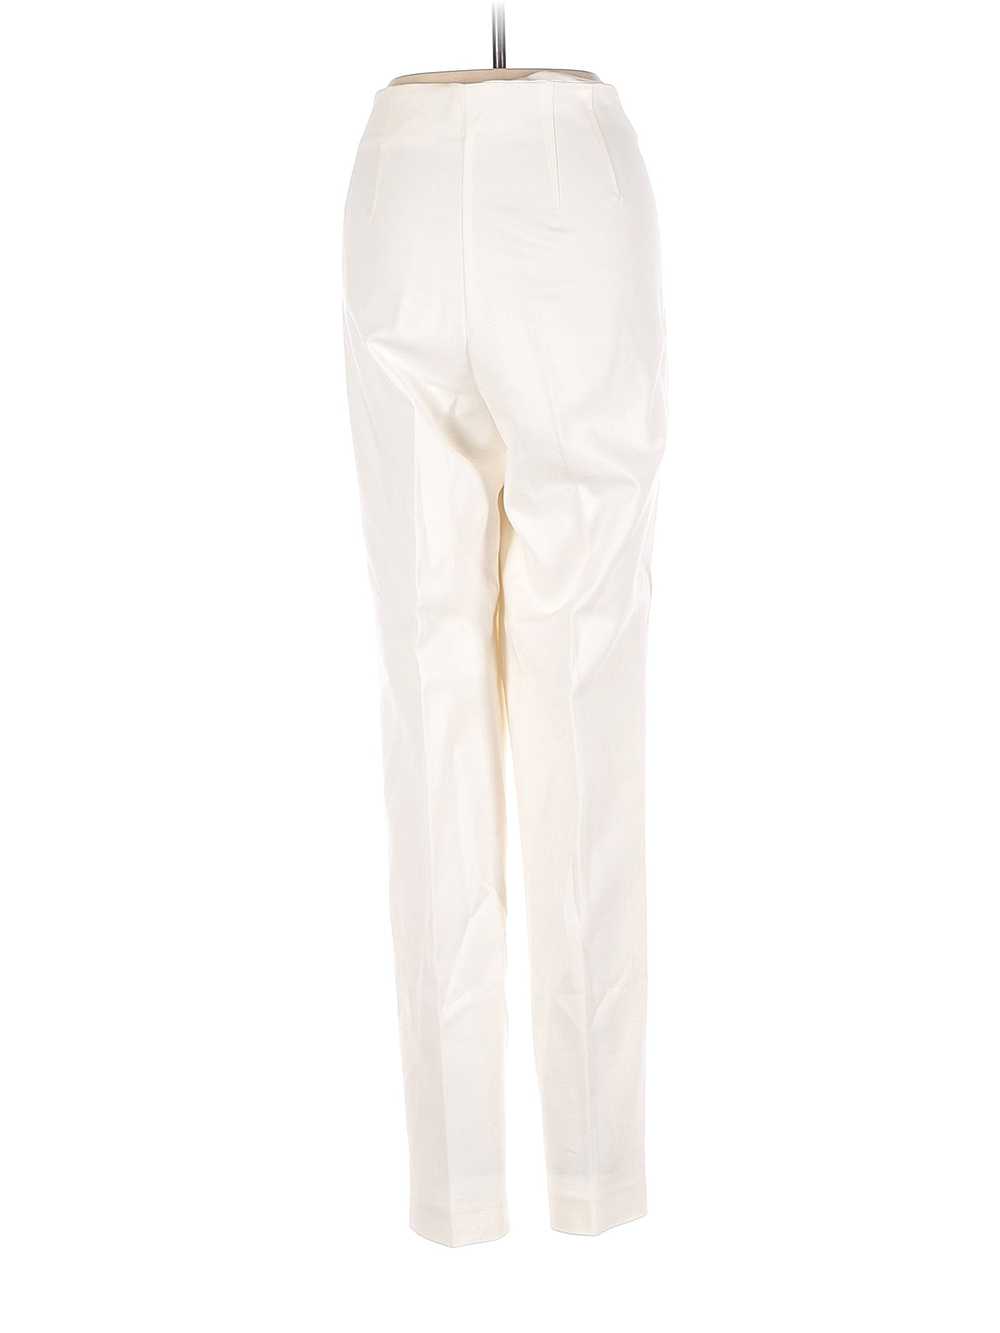 Vince Camuto Women Ivory Dress Pants 6 - image 2